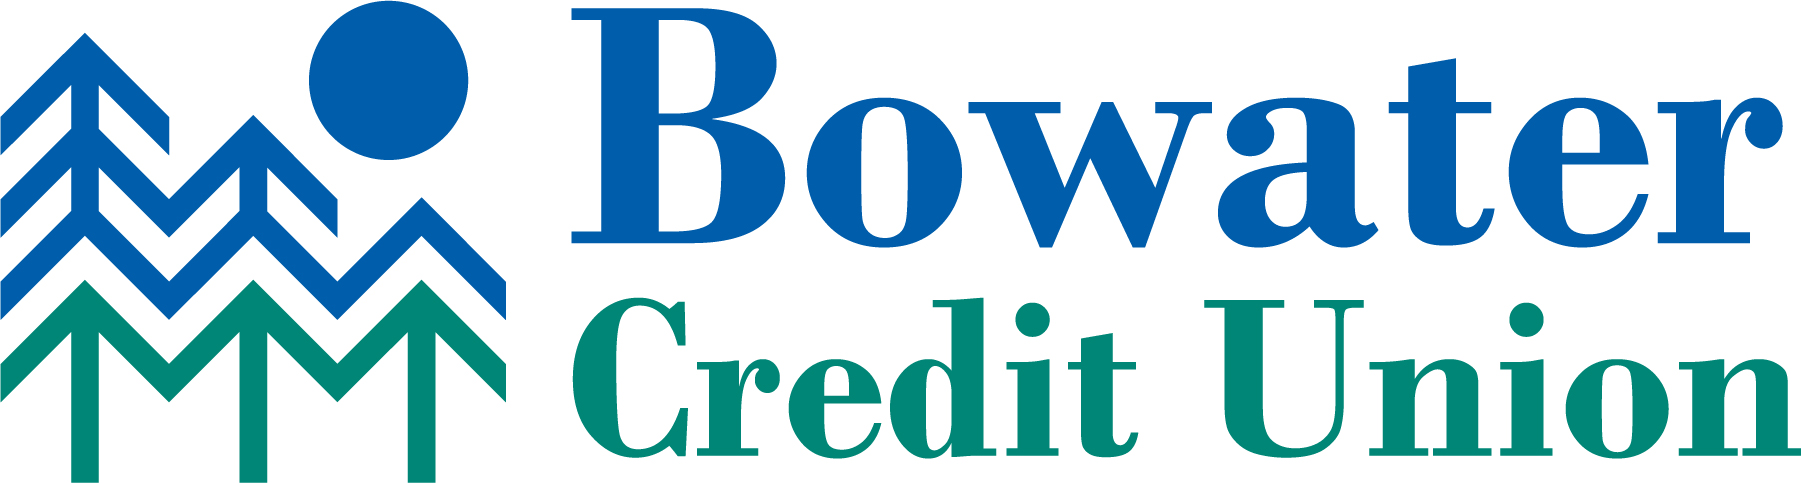 Bowater Credit Union Logo